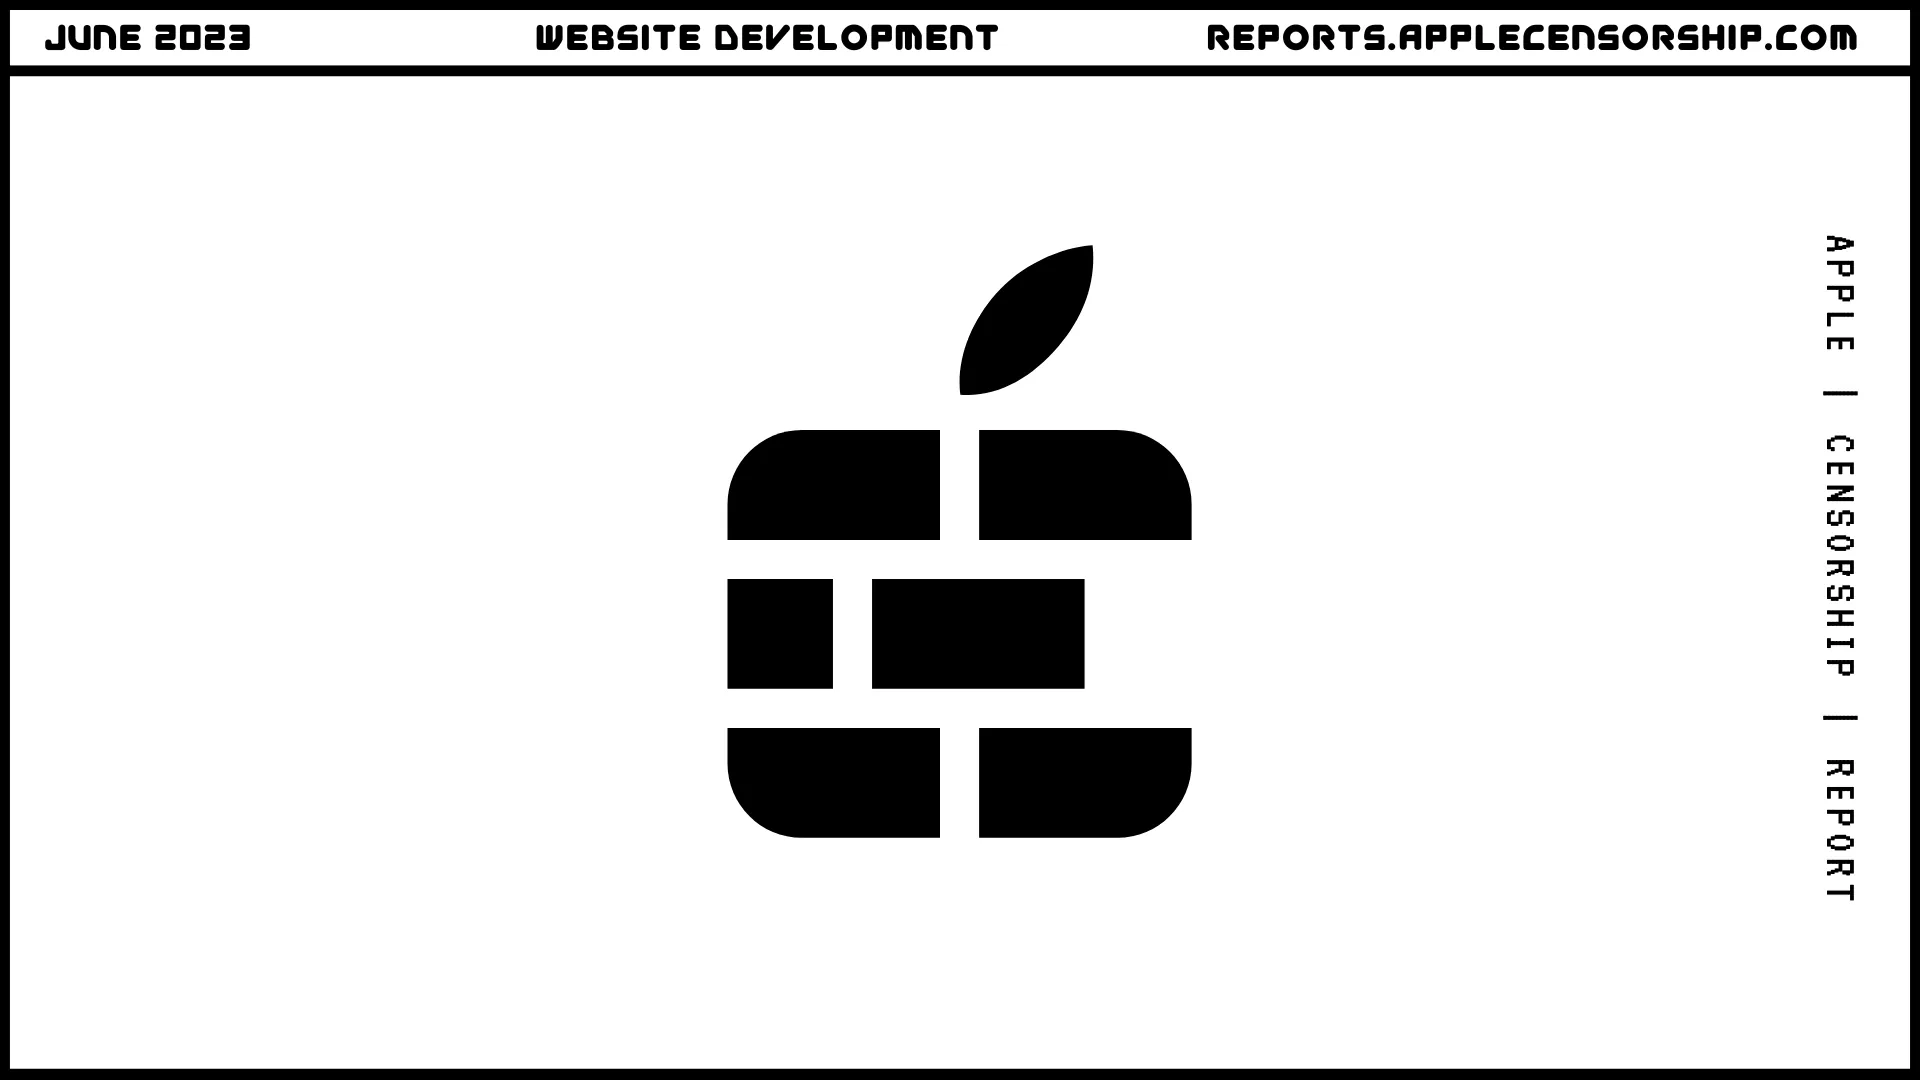 Apple Censorship Reports